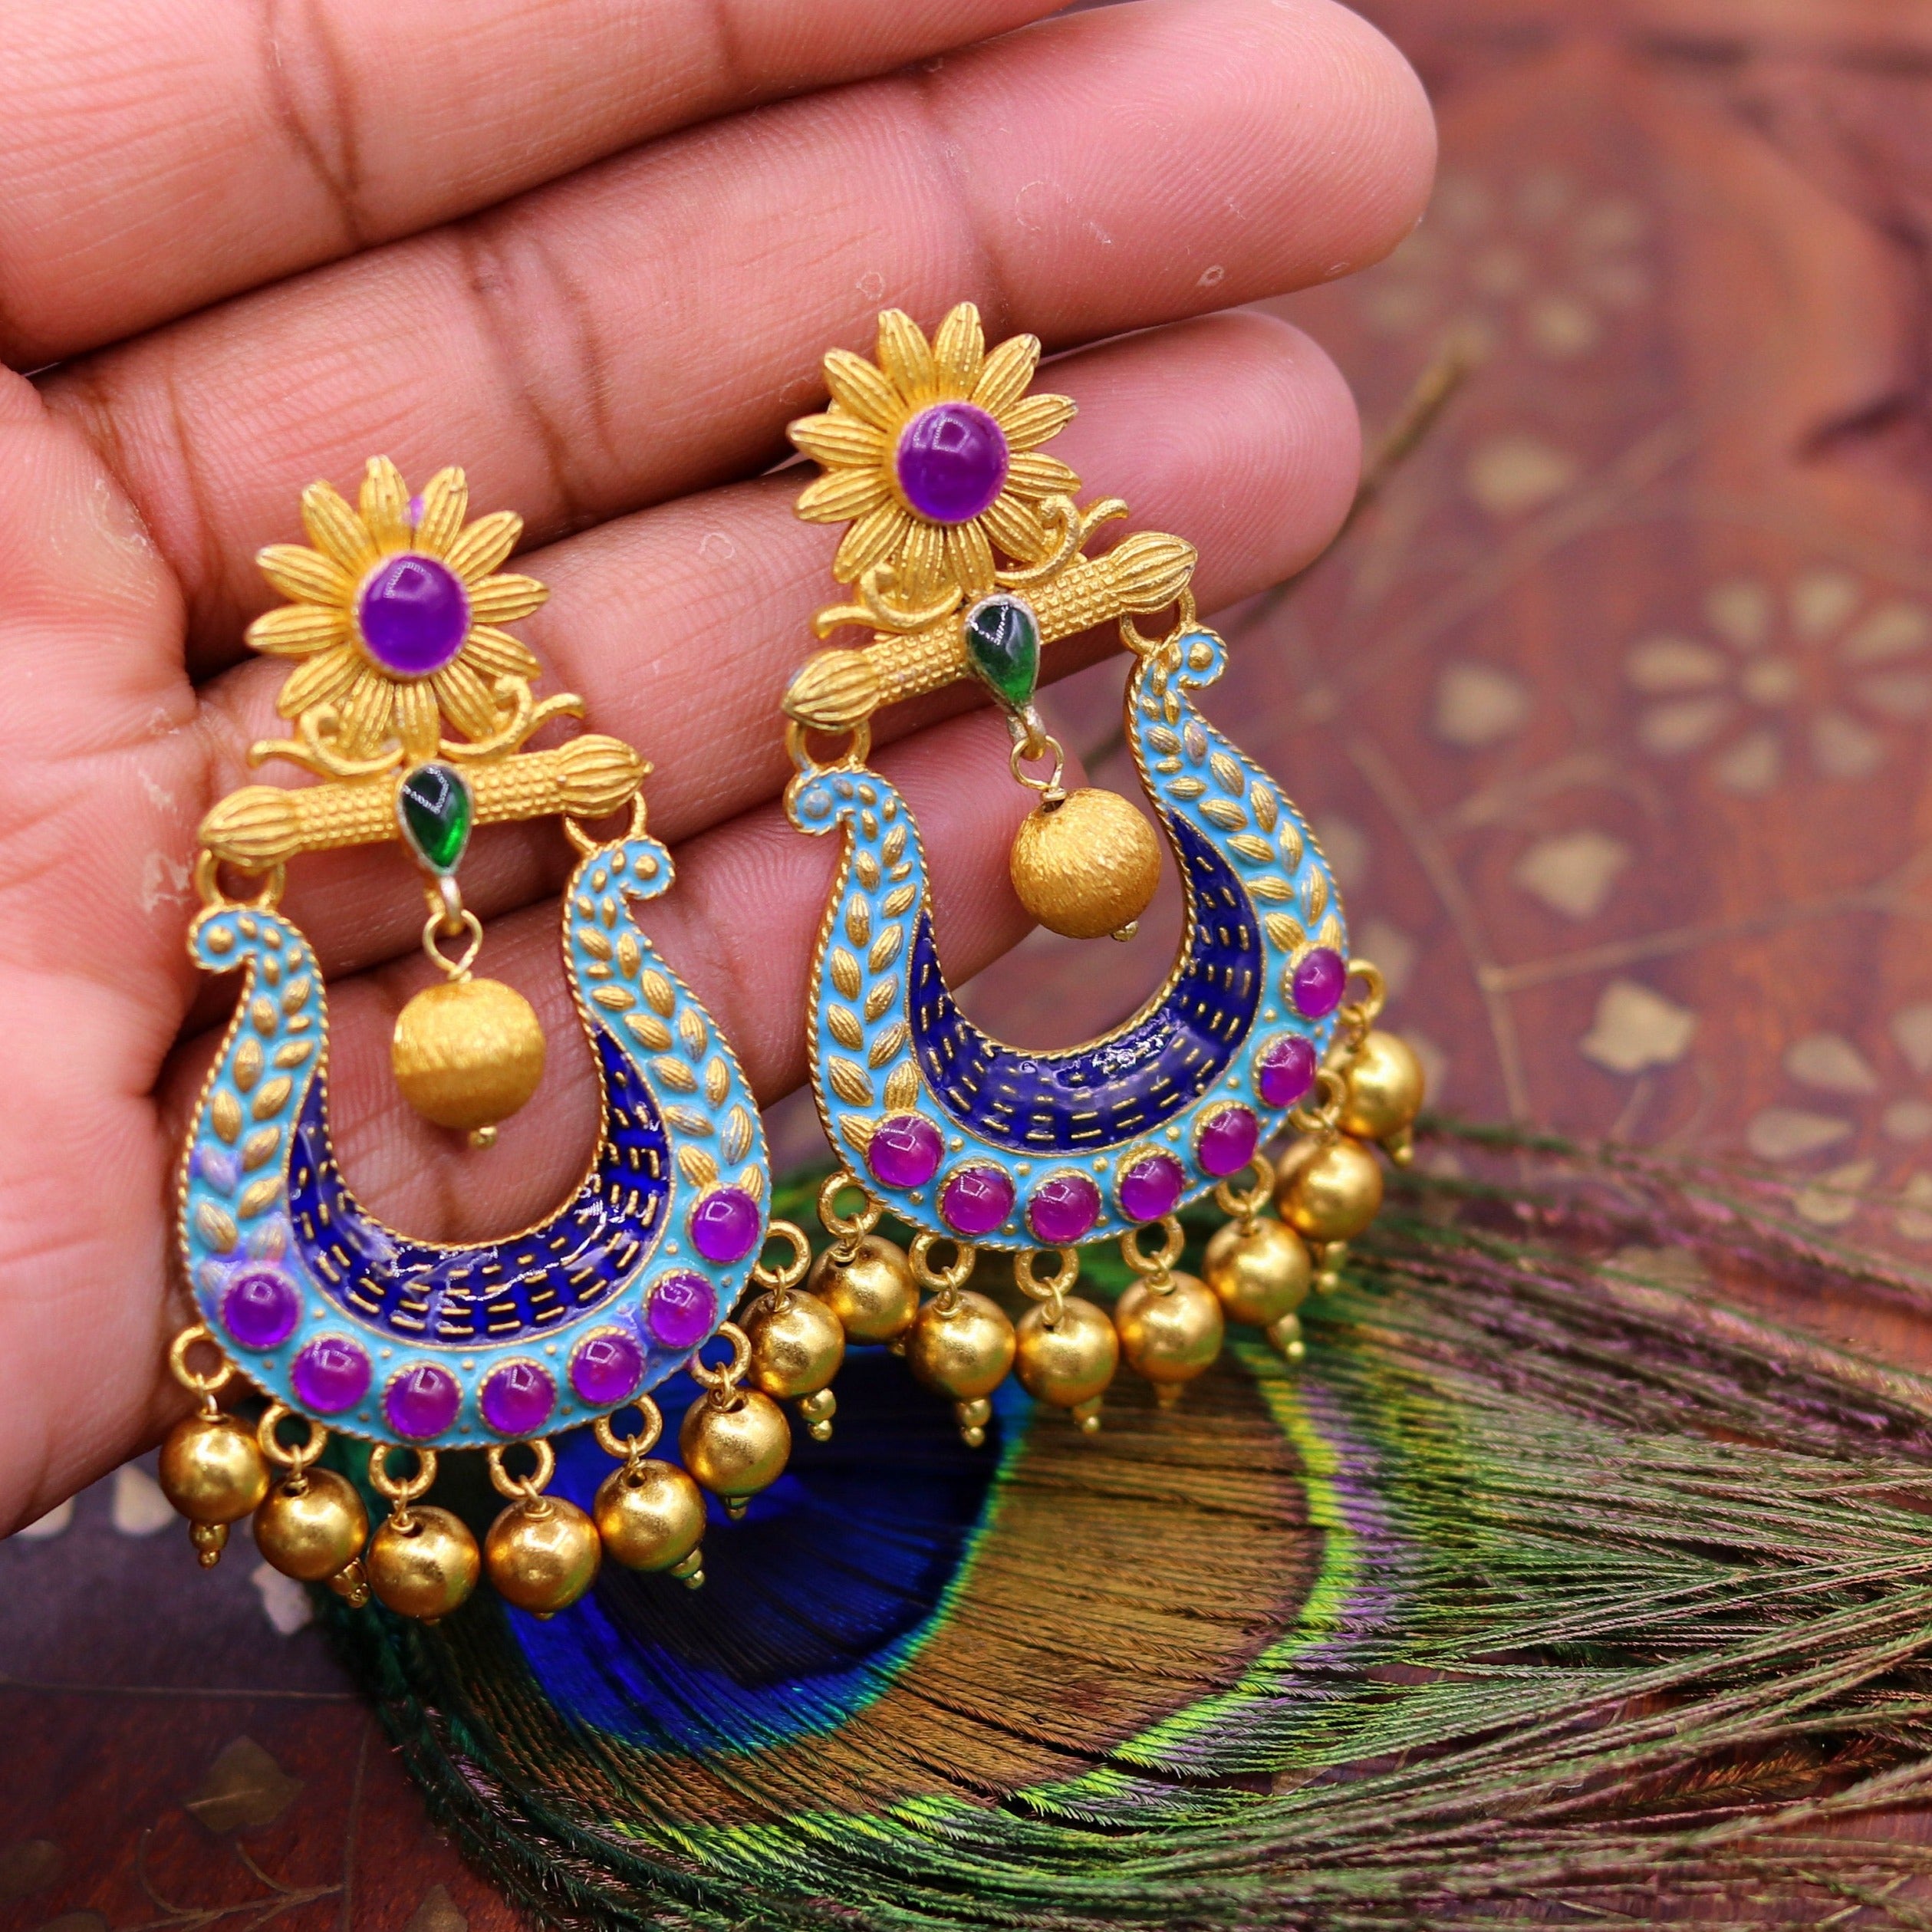 Handmade Vintage Inspired Floral Dangle Earrings Gift Idea For Her   BluKatDesign Handmade Artisan Upcycled Jewelry Ornaments